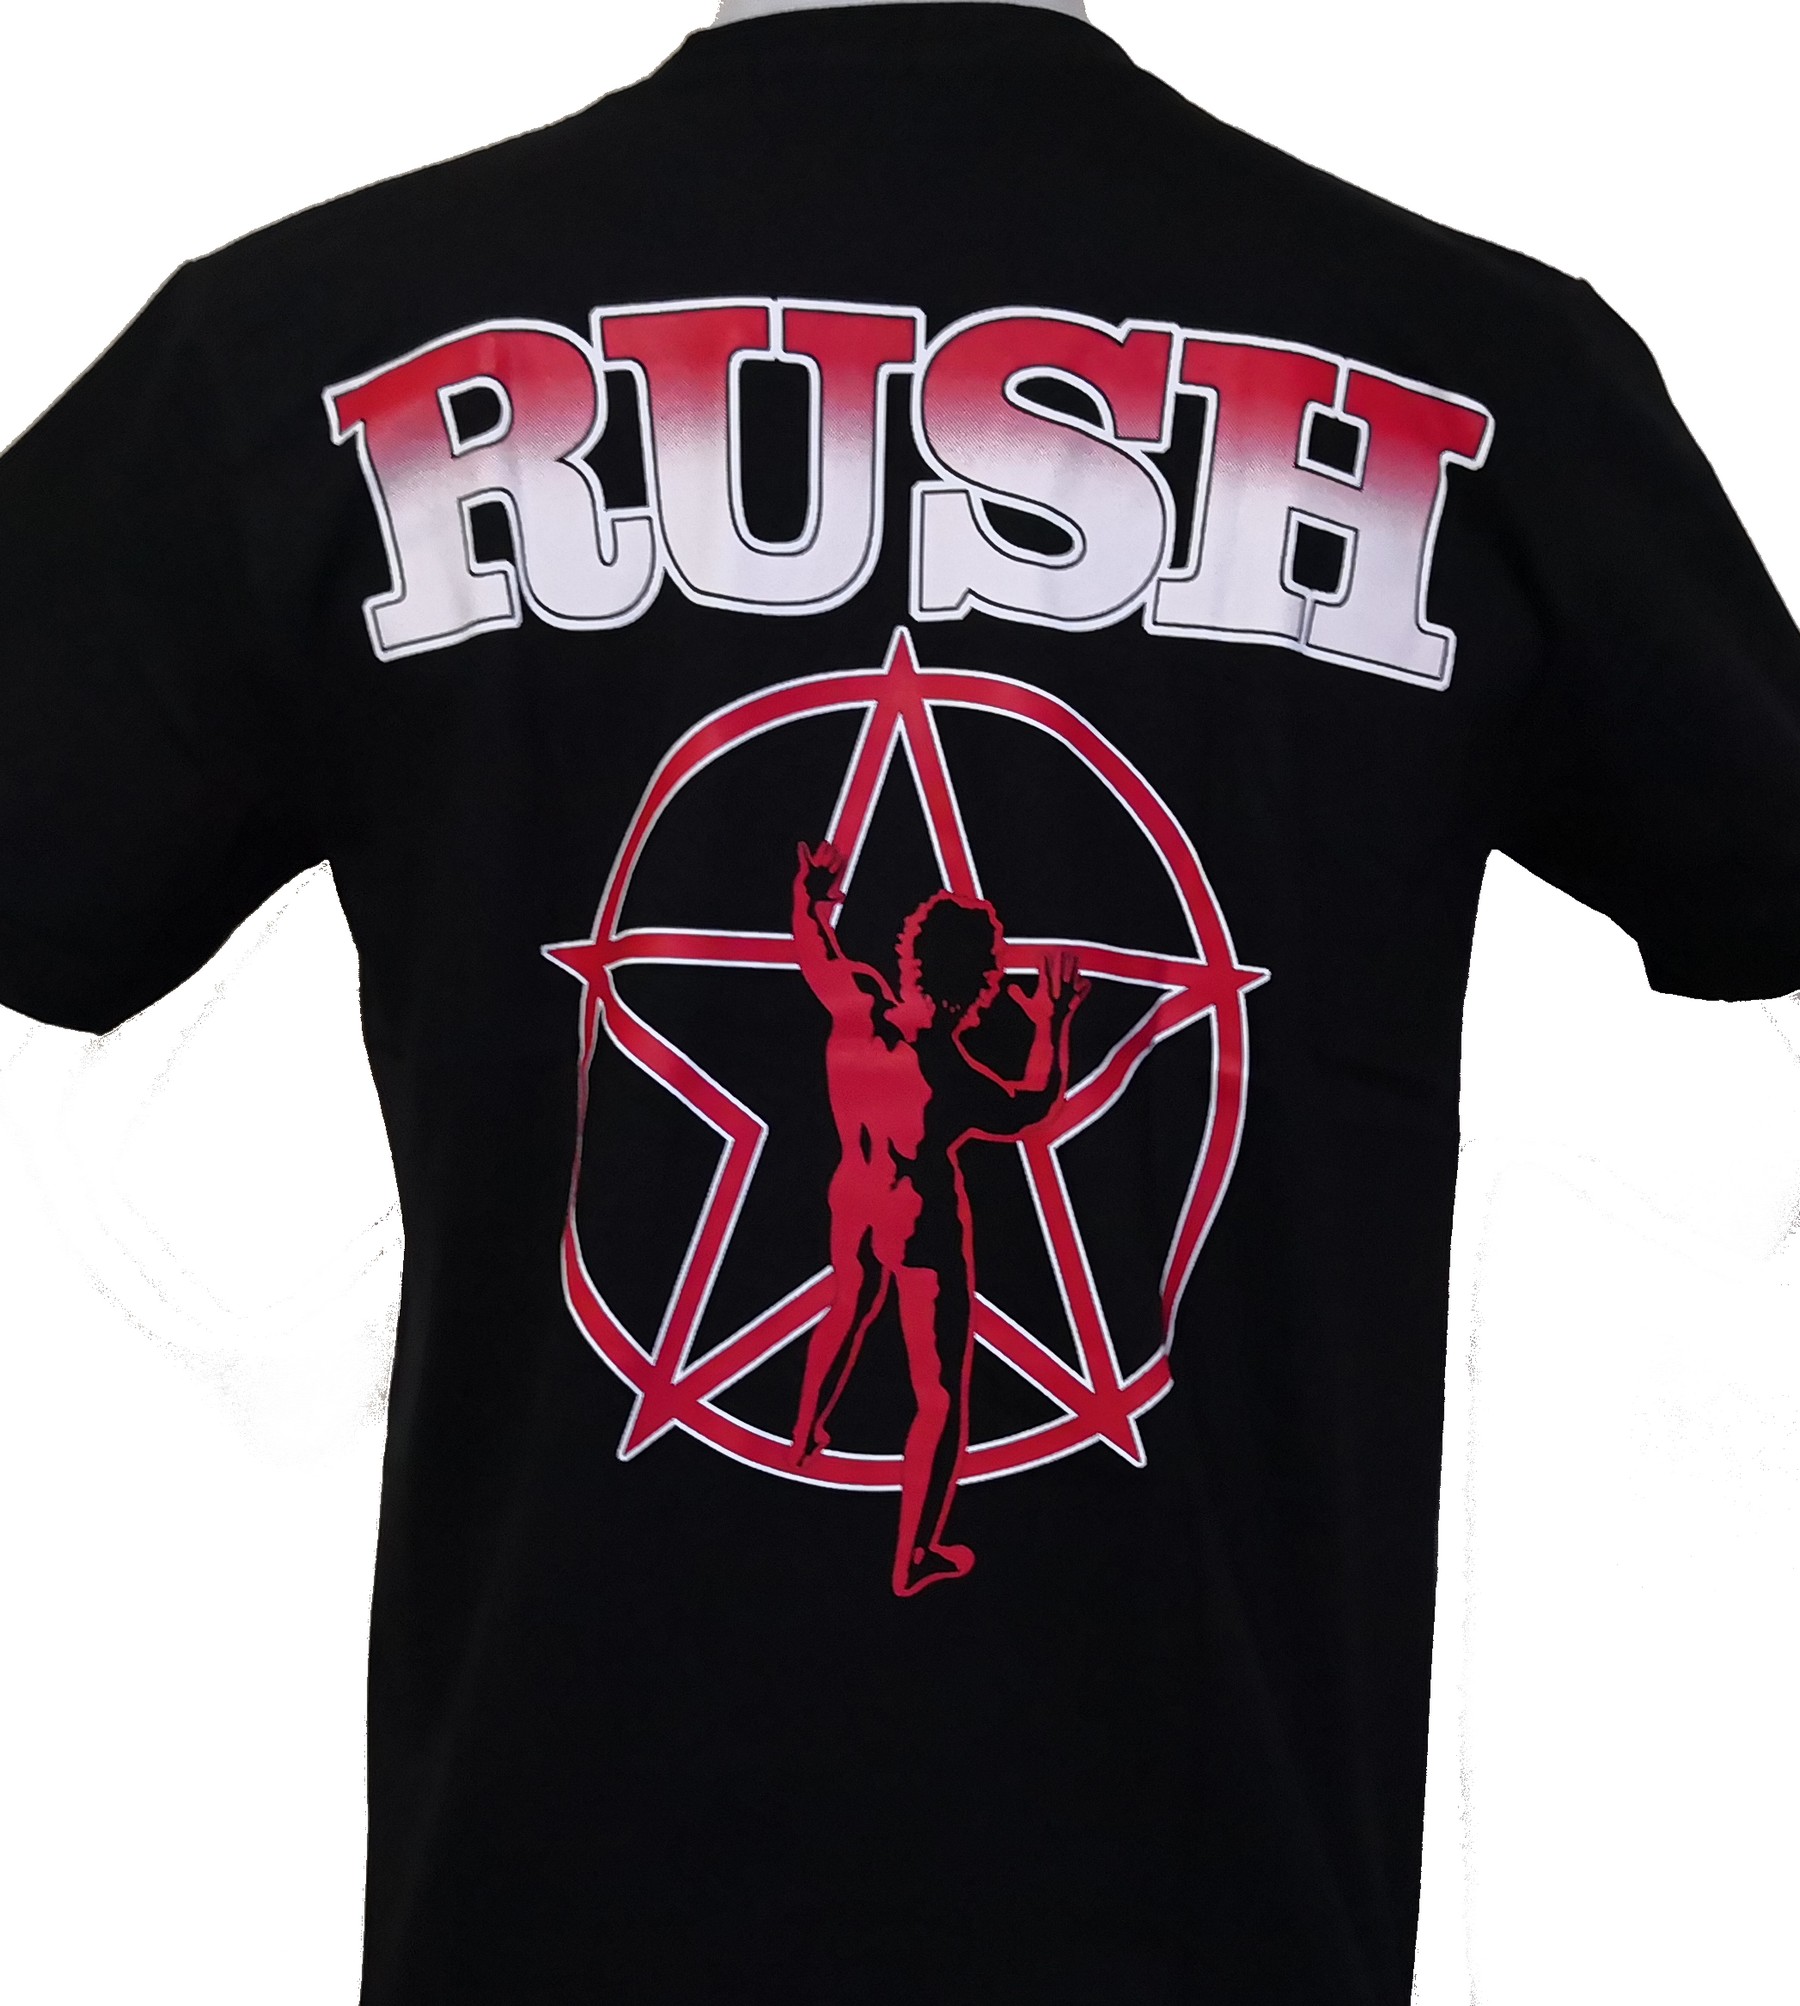 Rush t-shirt size – RoxxBKK S